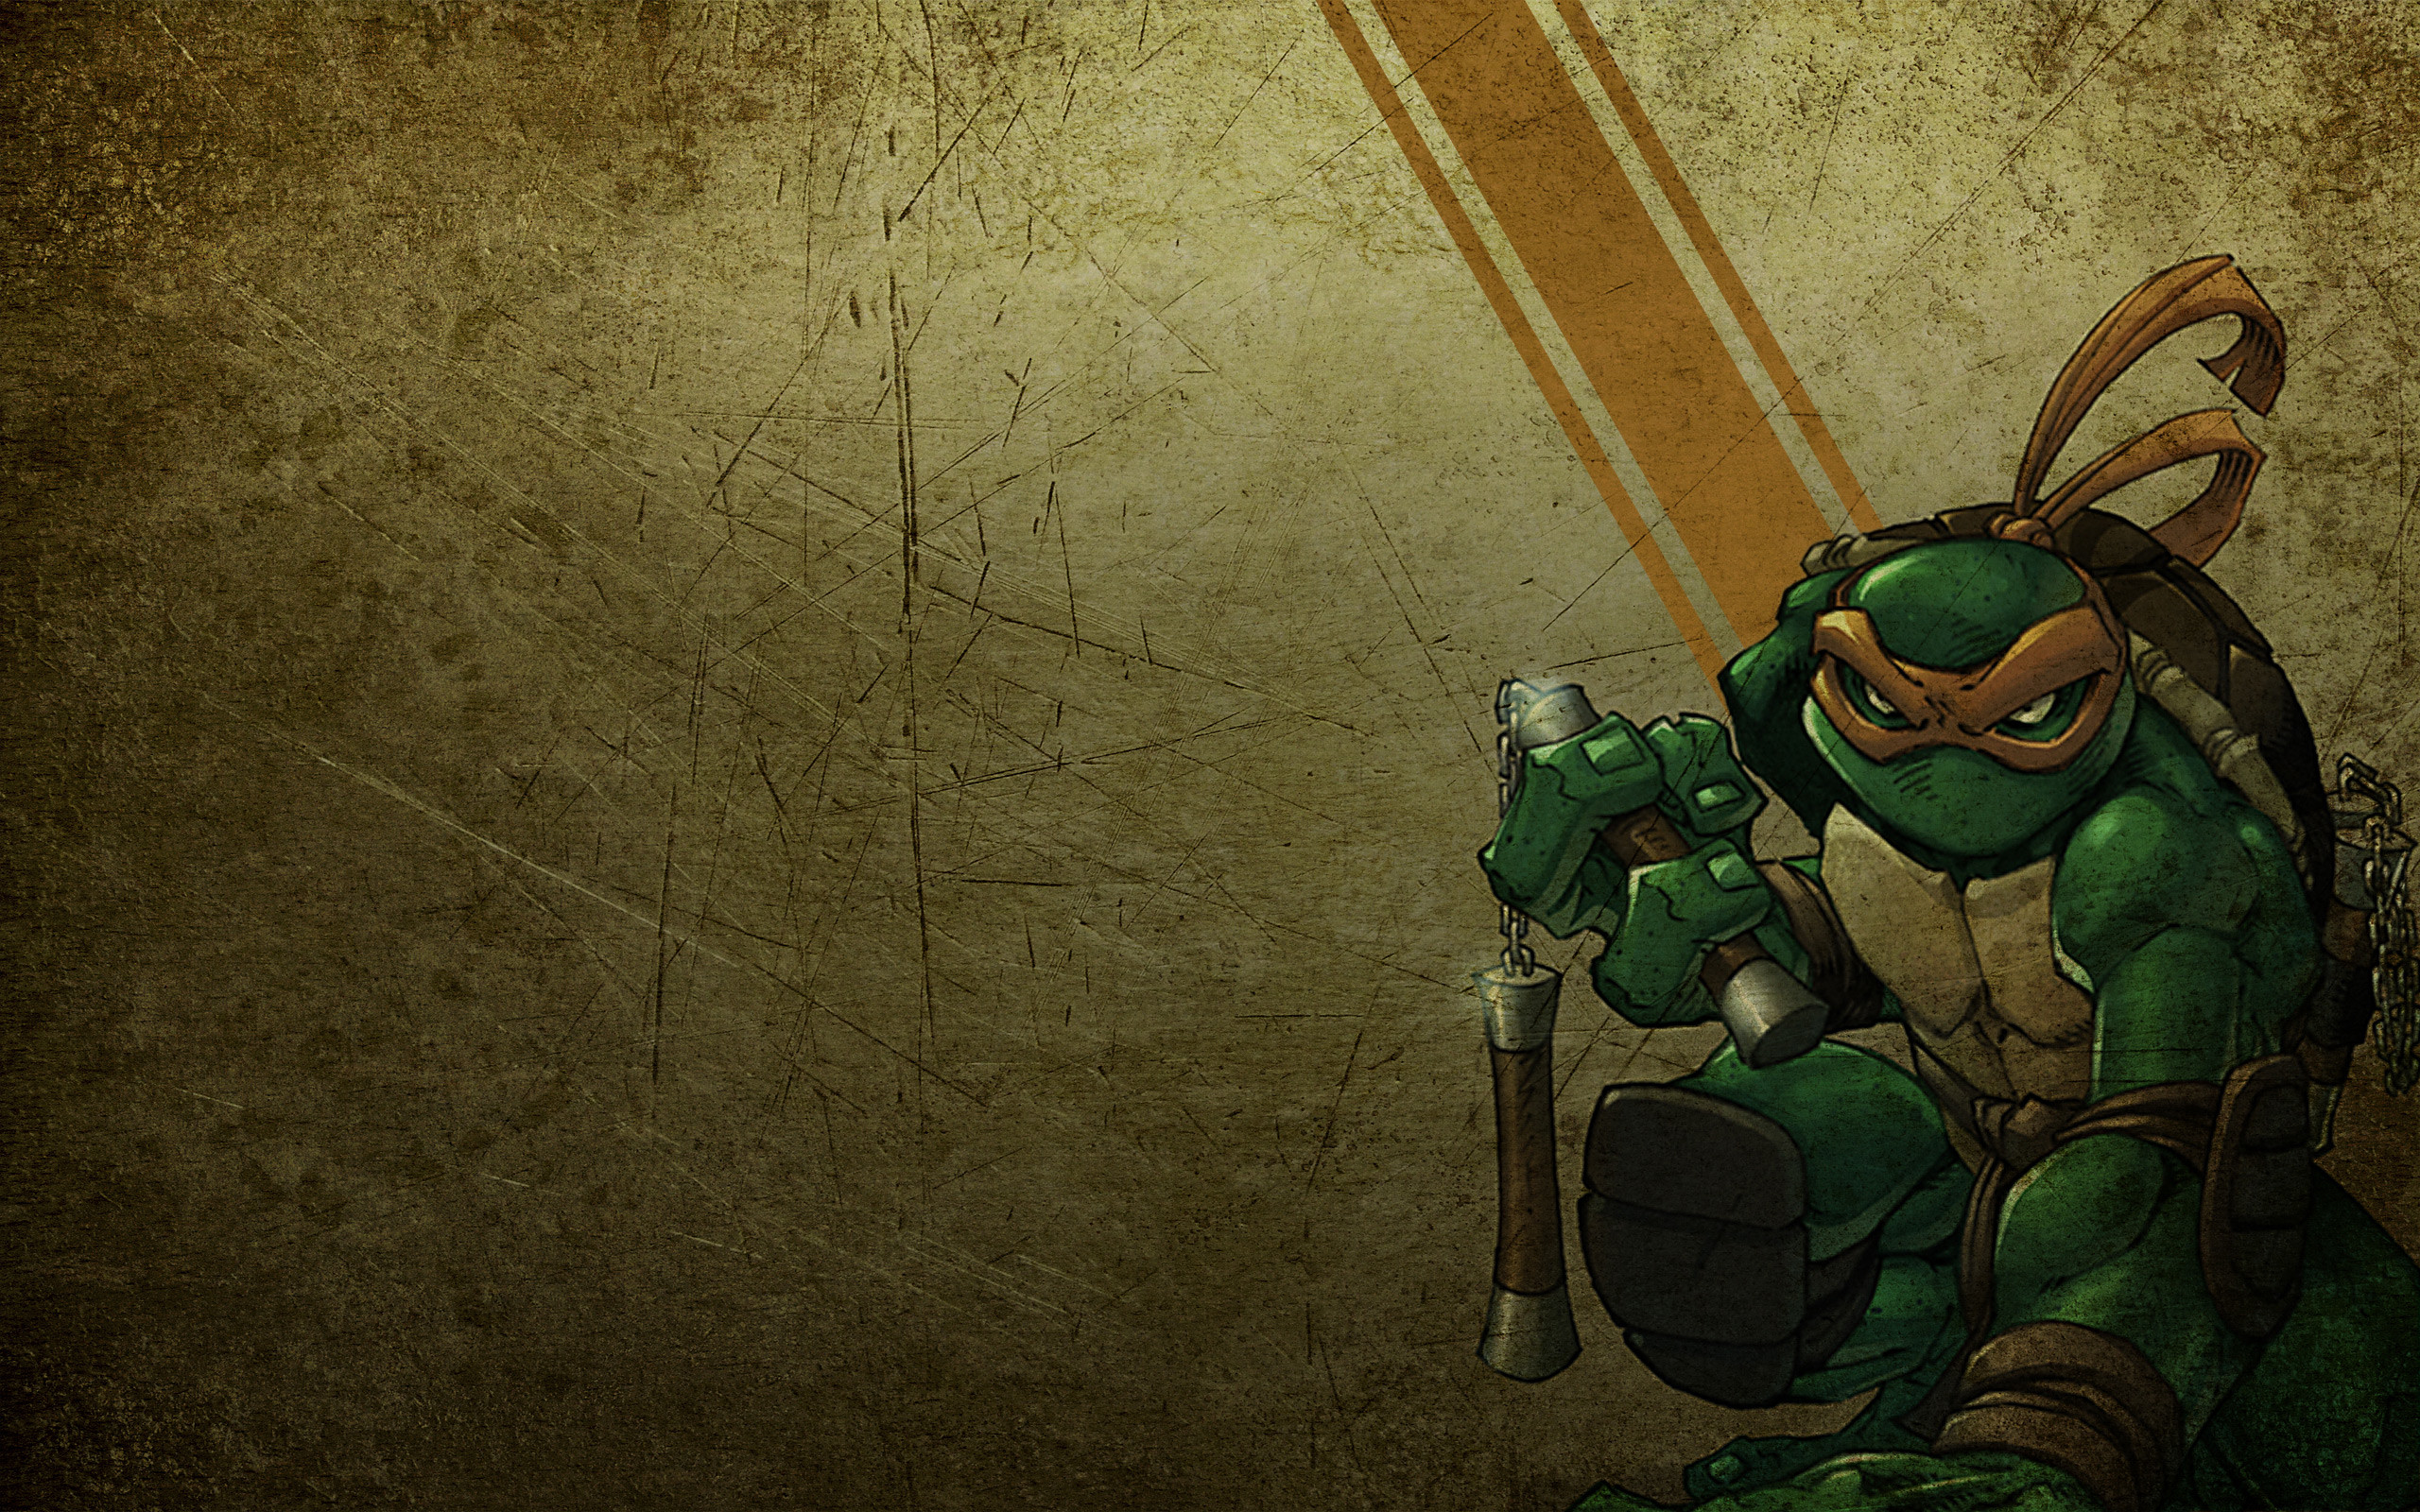 2560x1600 ... Cool Teenage Mutant Ninja Turtles Images HQFX for Mobile ...